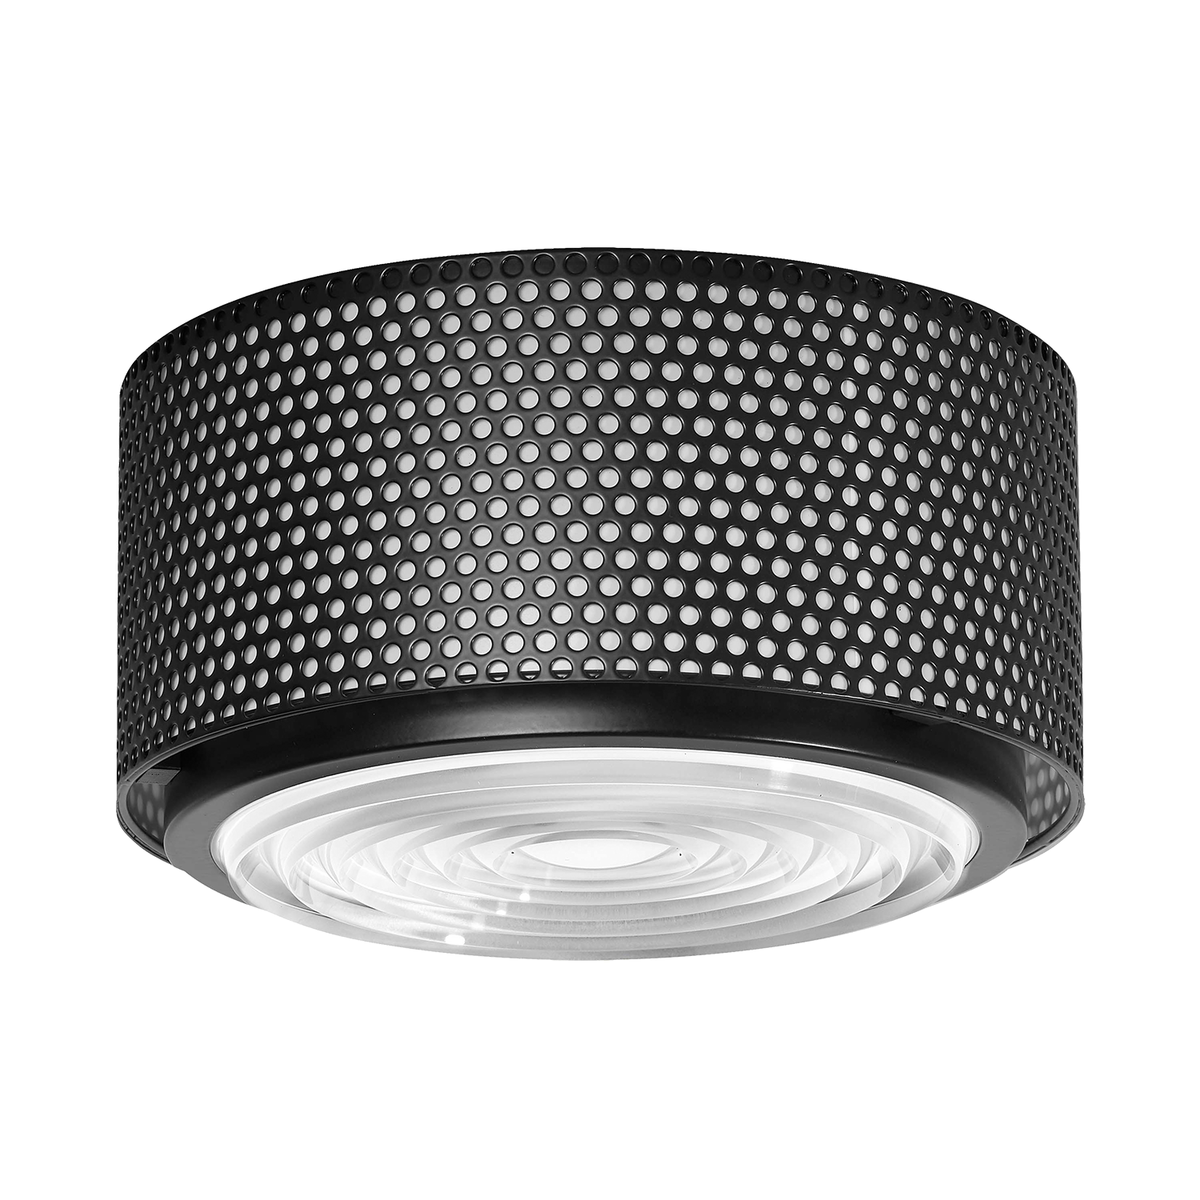 Sammode G13 Ceiling/Wall Lamp, Medium, Black